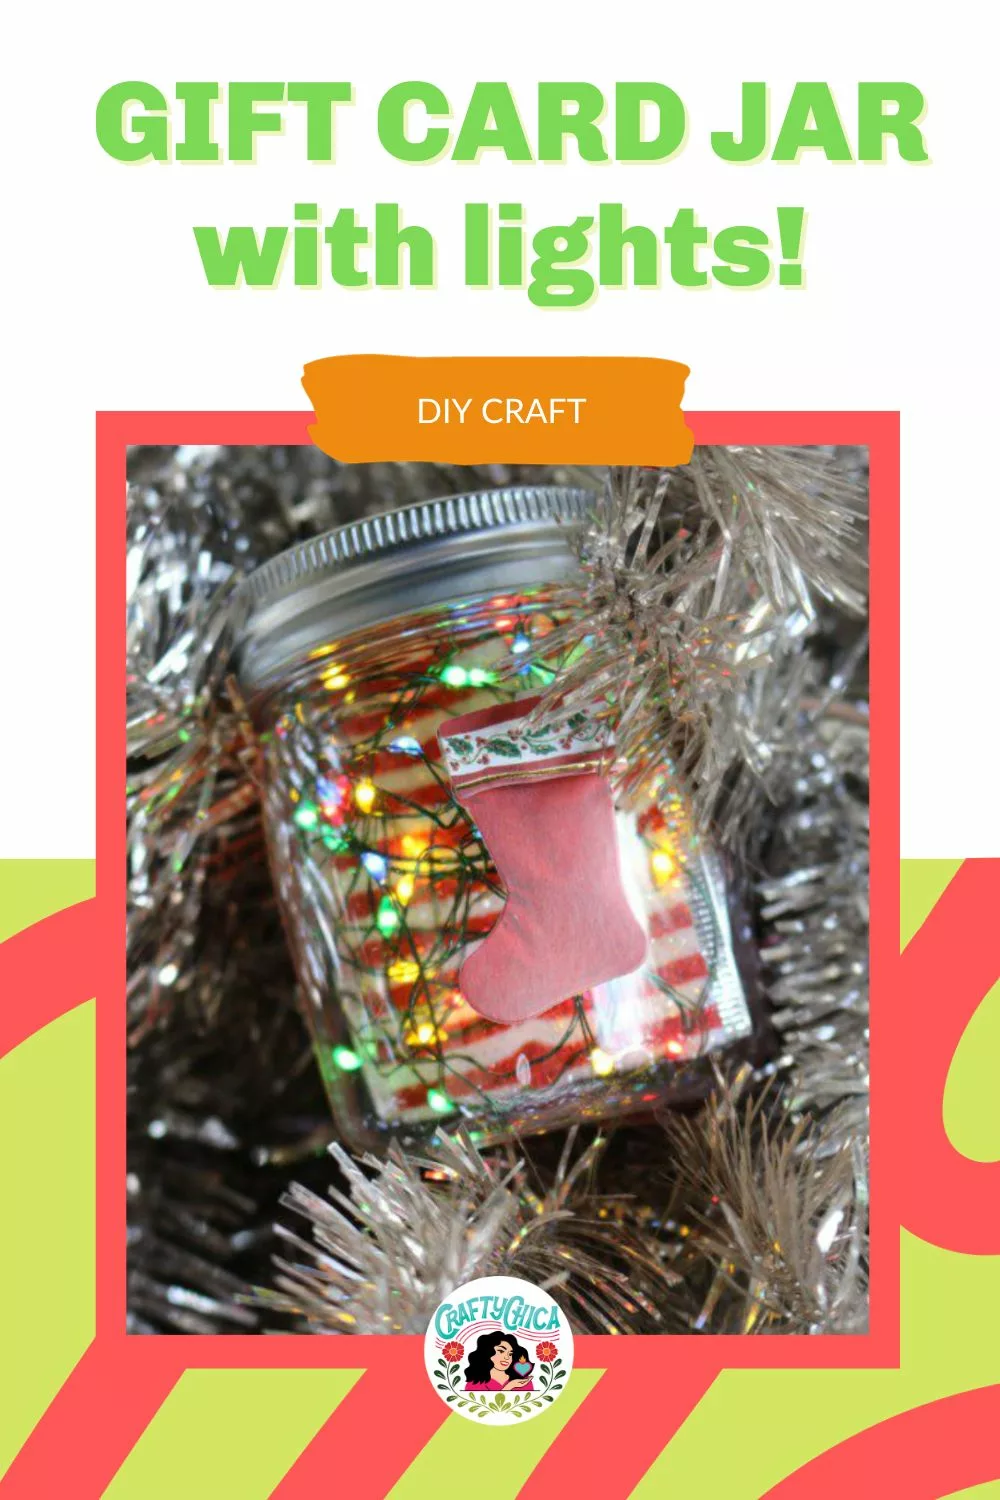 https://craftychica.com/wp-content/uploads/2018/11/gift-card-jar-with-lights-jpg.webp